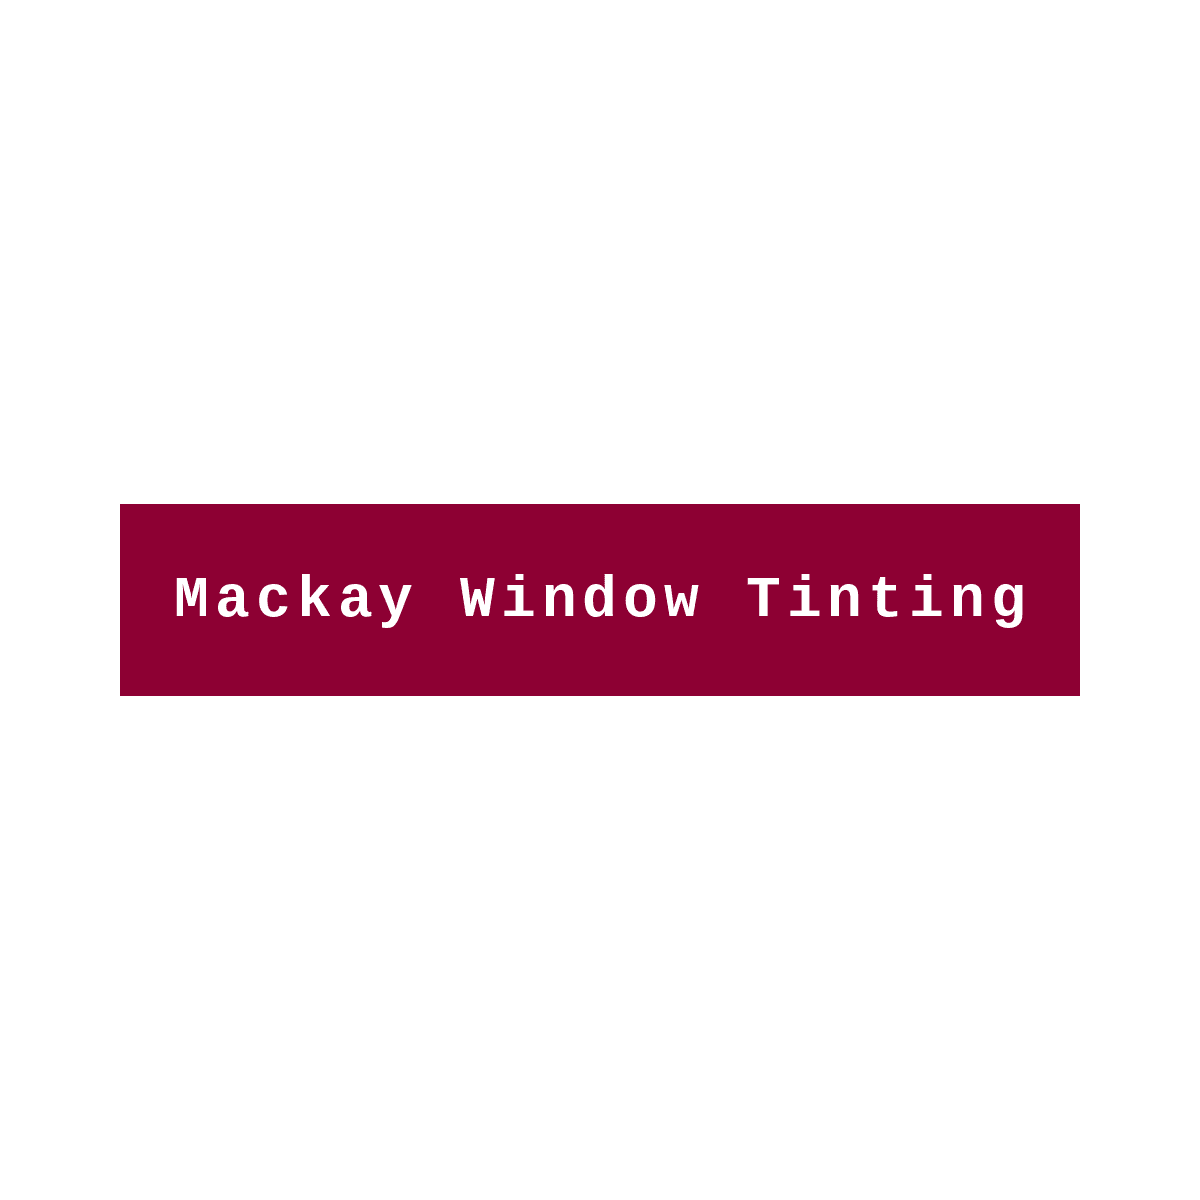 Mackay Window Tinting